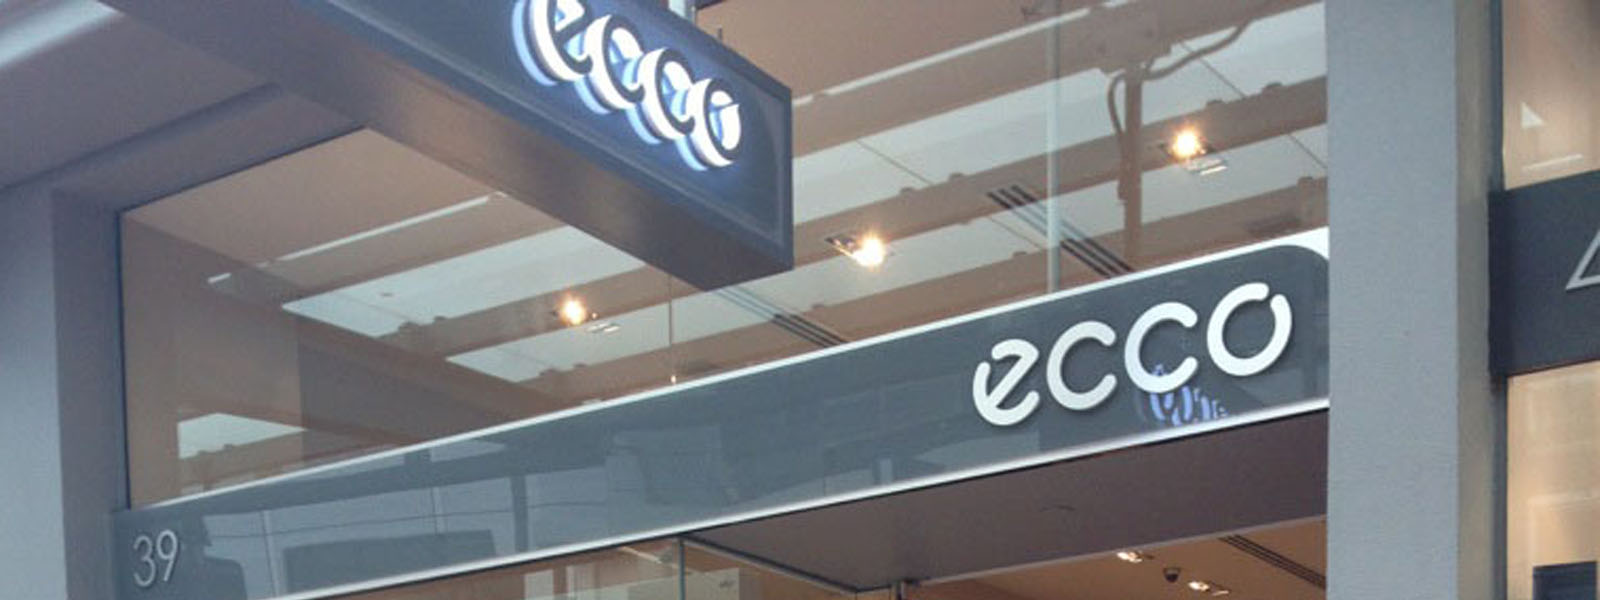 ECCO in NZ